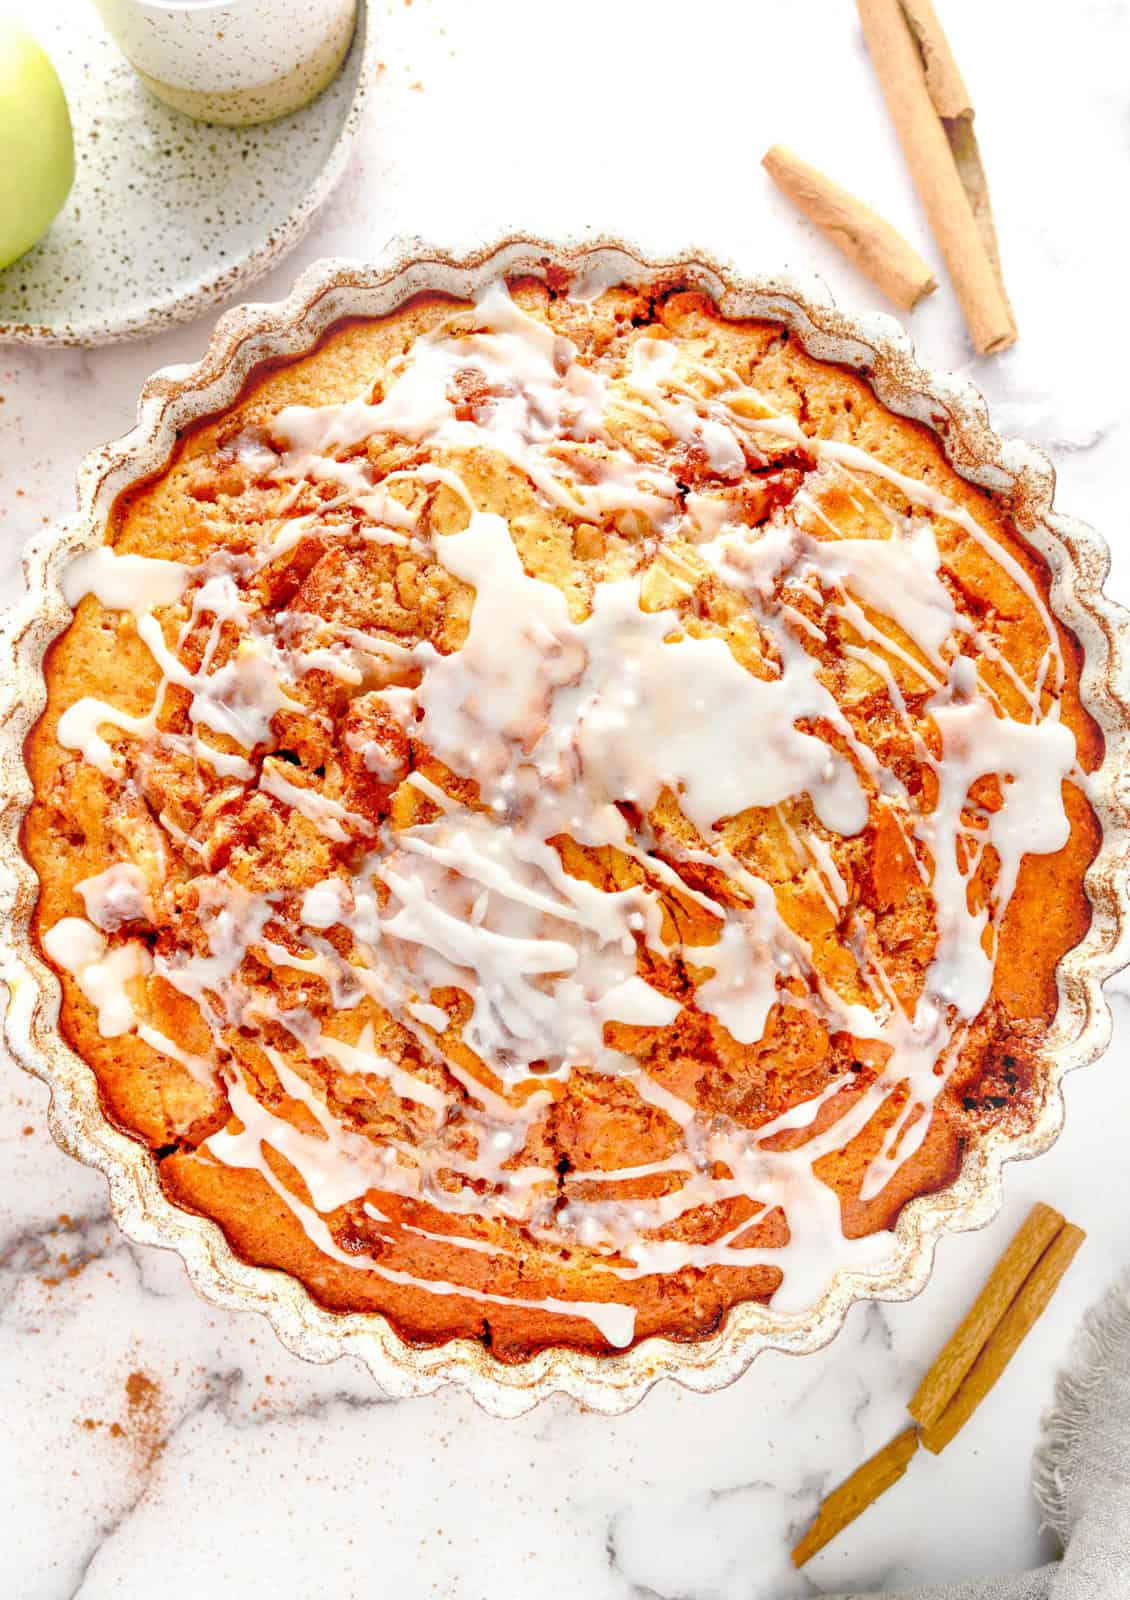 Overhead image of finished Apple Cinnamon Cake in baking pan.